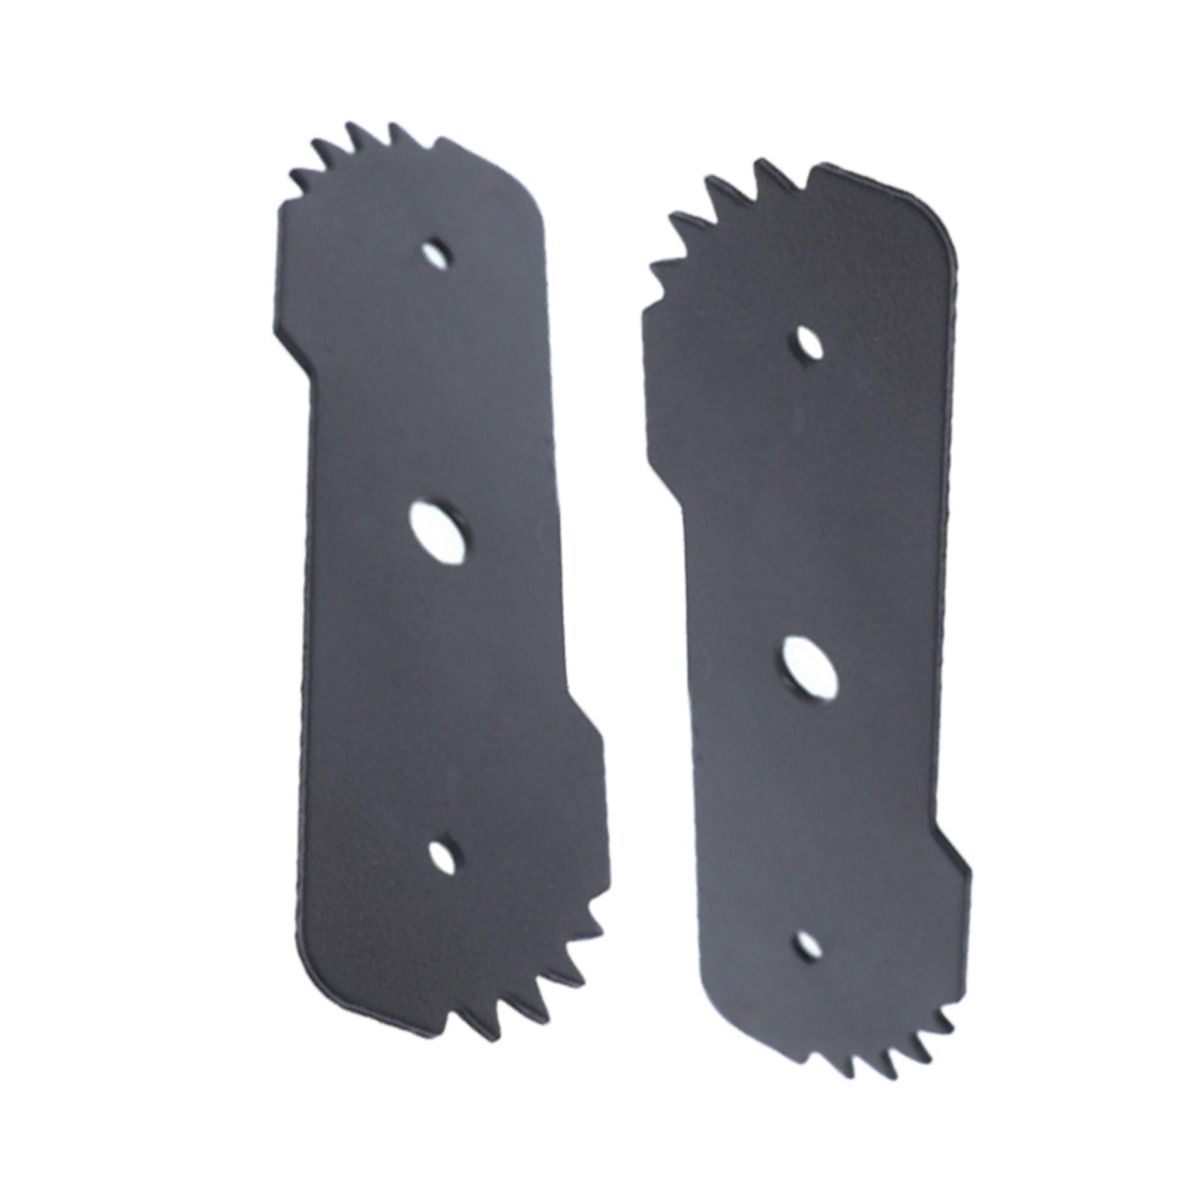 3 each: Black & Decker Replacement Blade for Le750 Edger (EB-007AL)